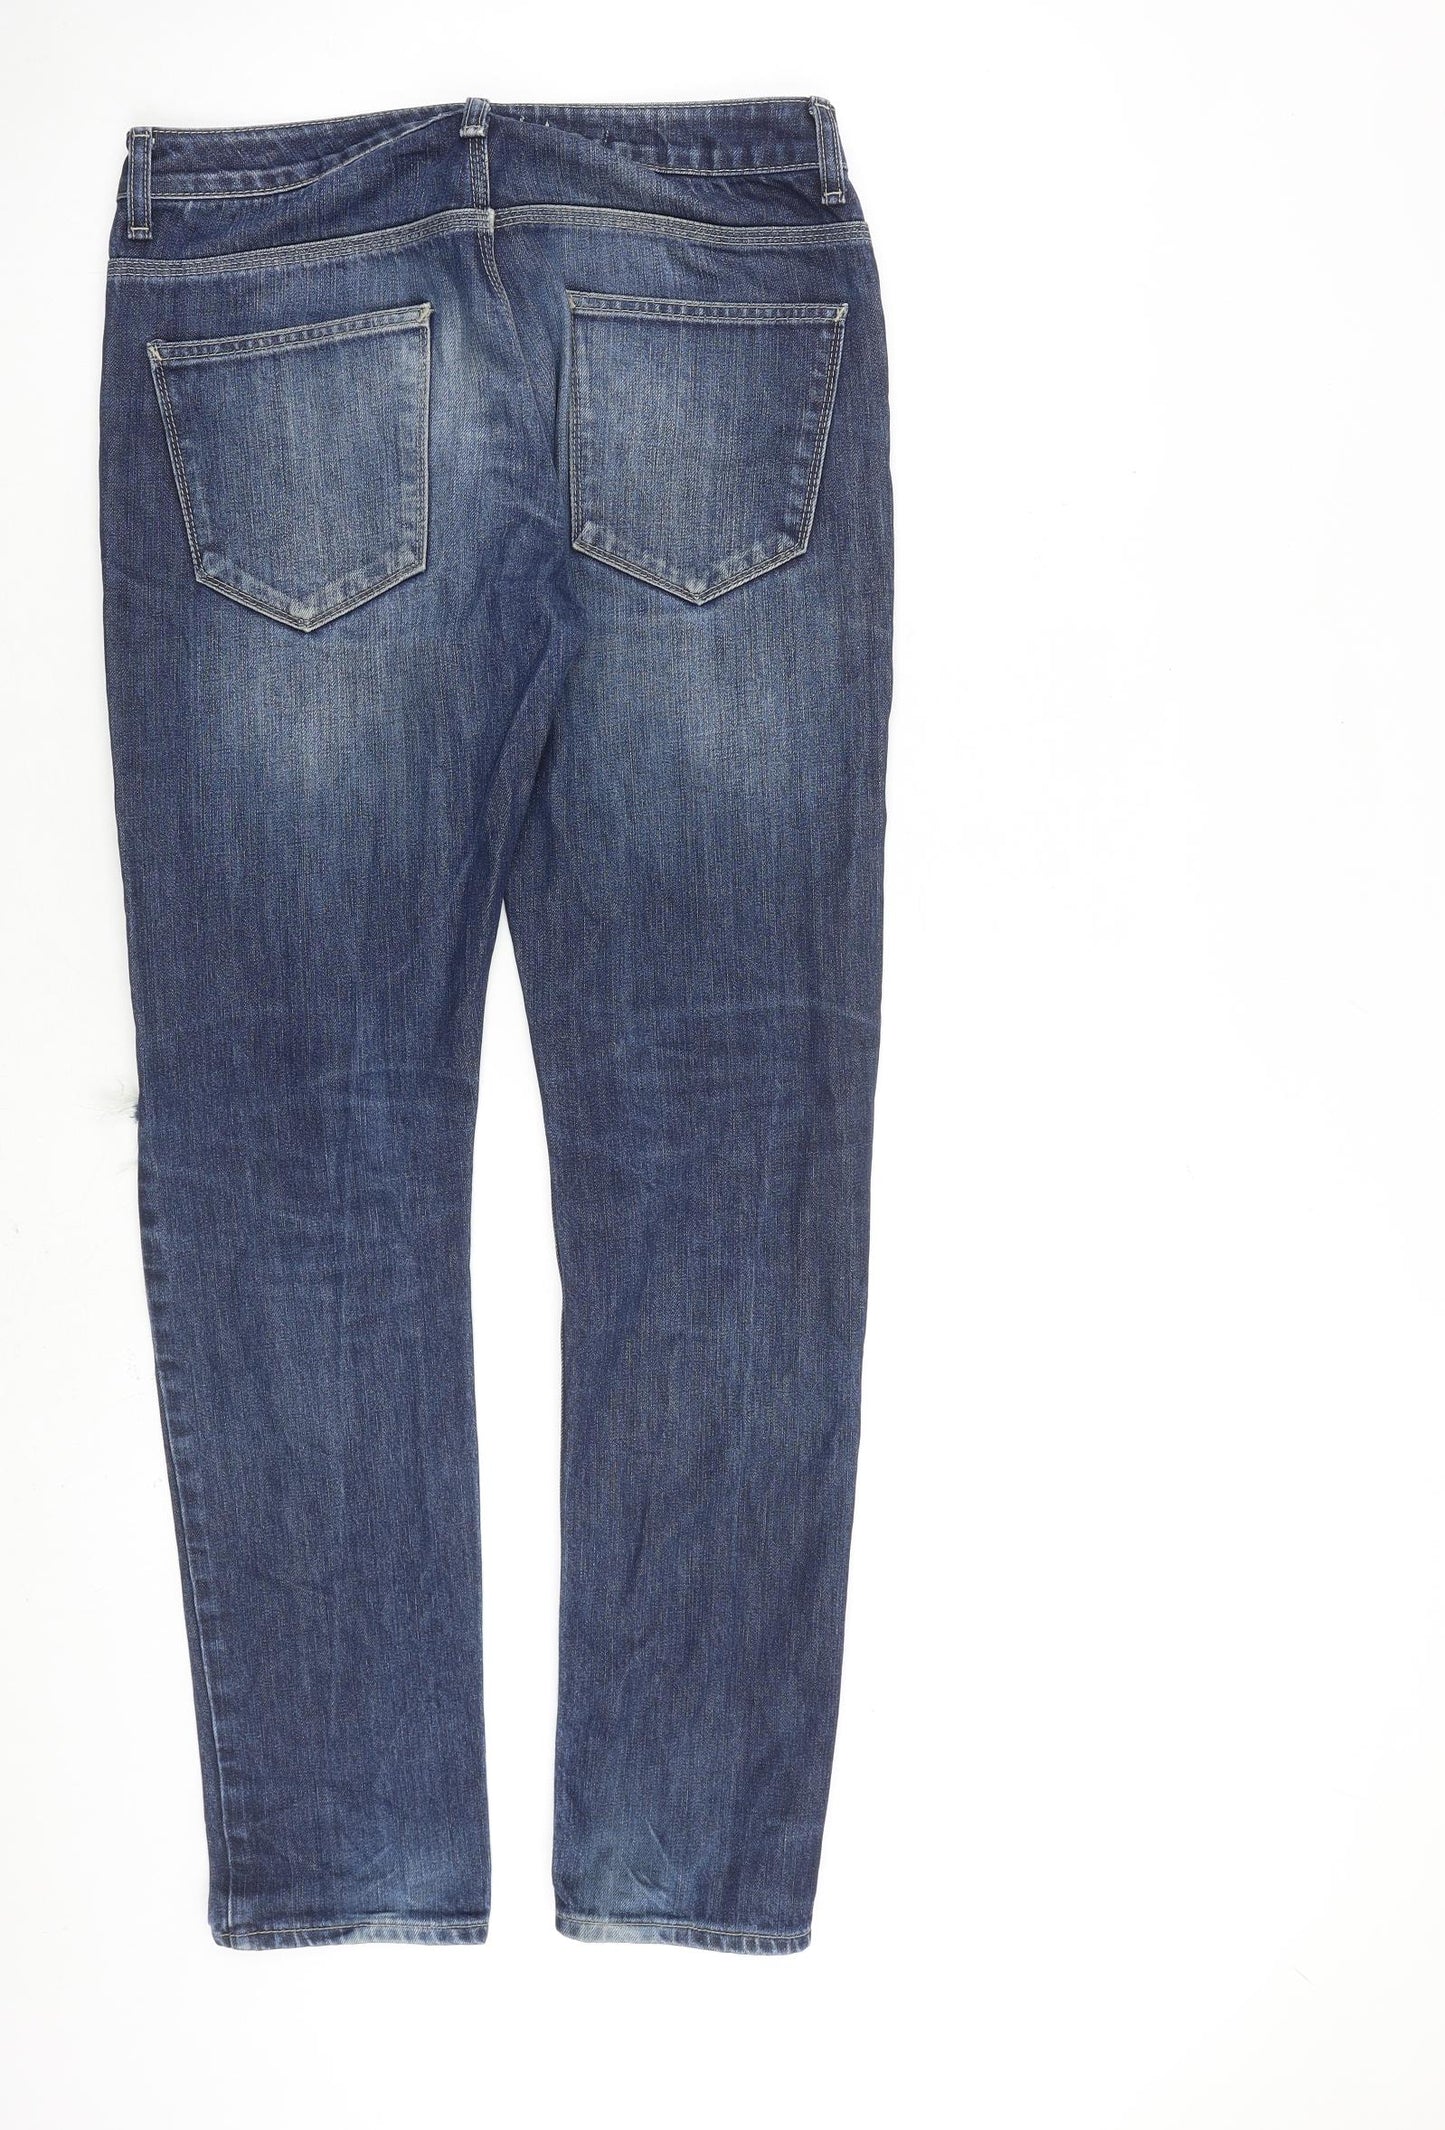 Topman Mens Blue Cotton Skinny Jeans Size 32 in L30 in Regular Zip